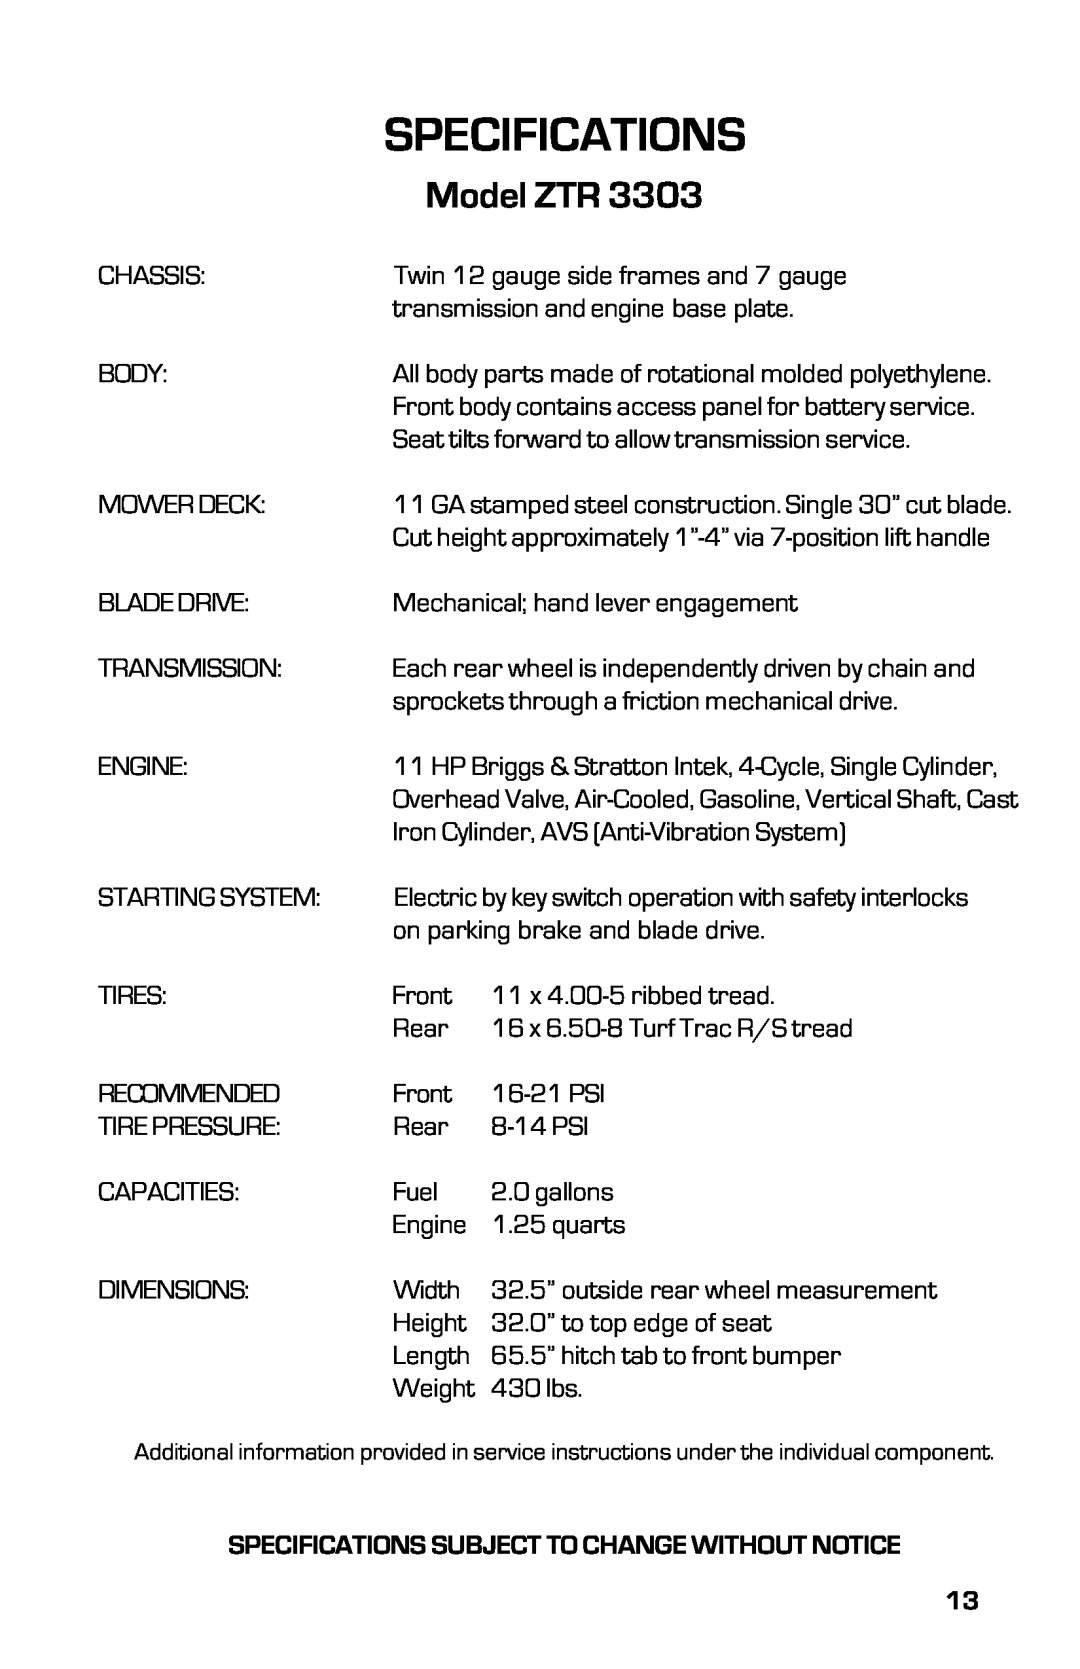 Dixon 13631-0702, ZTR 3363 manual Specifications, Model ZTR 